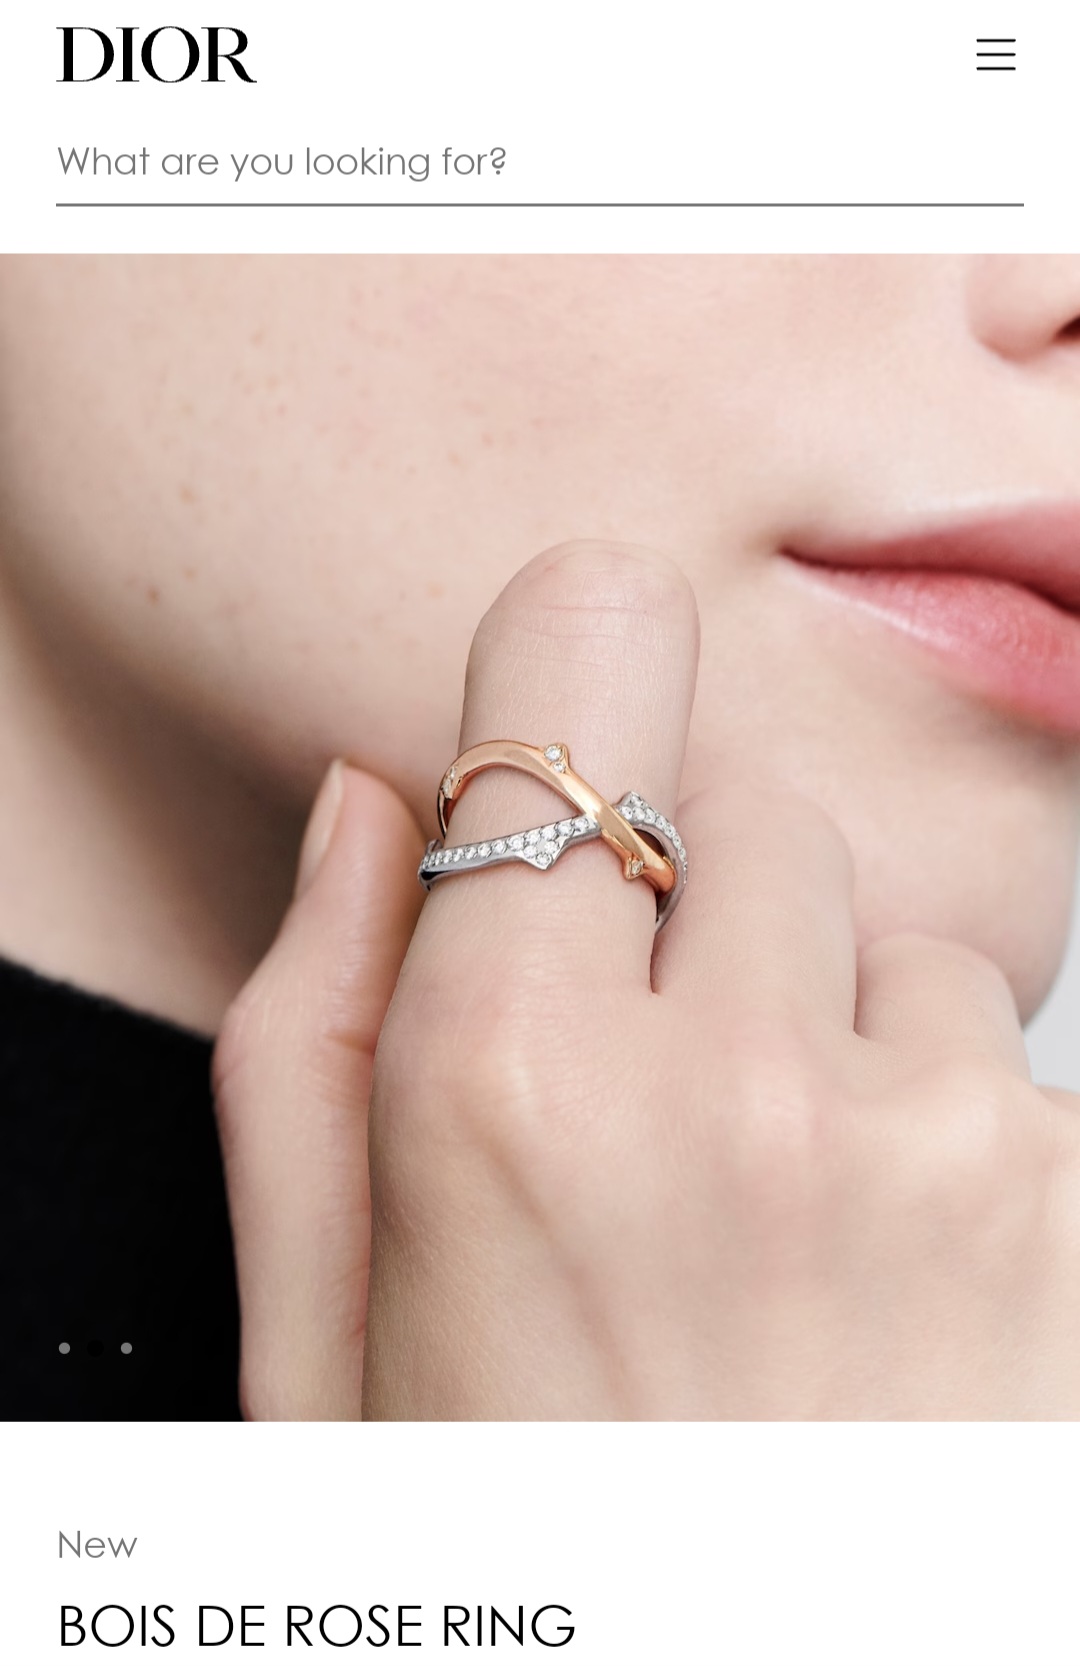 Dior BOIS DE ROSE ring